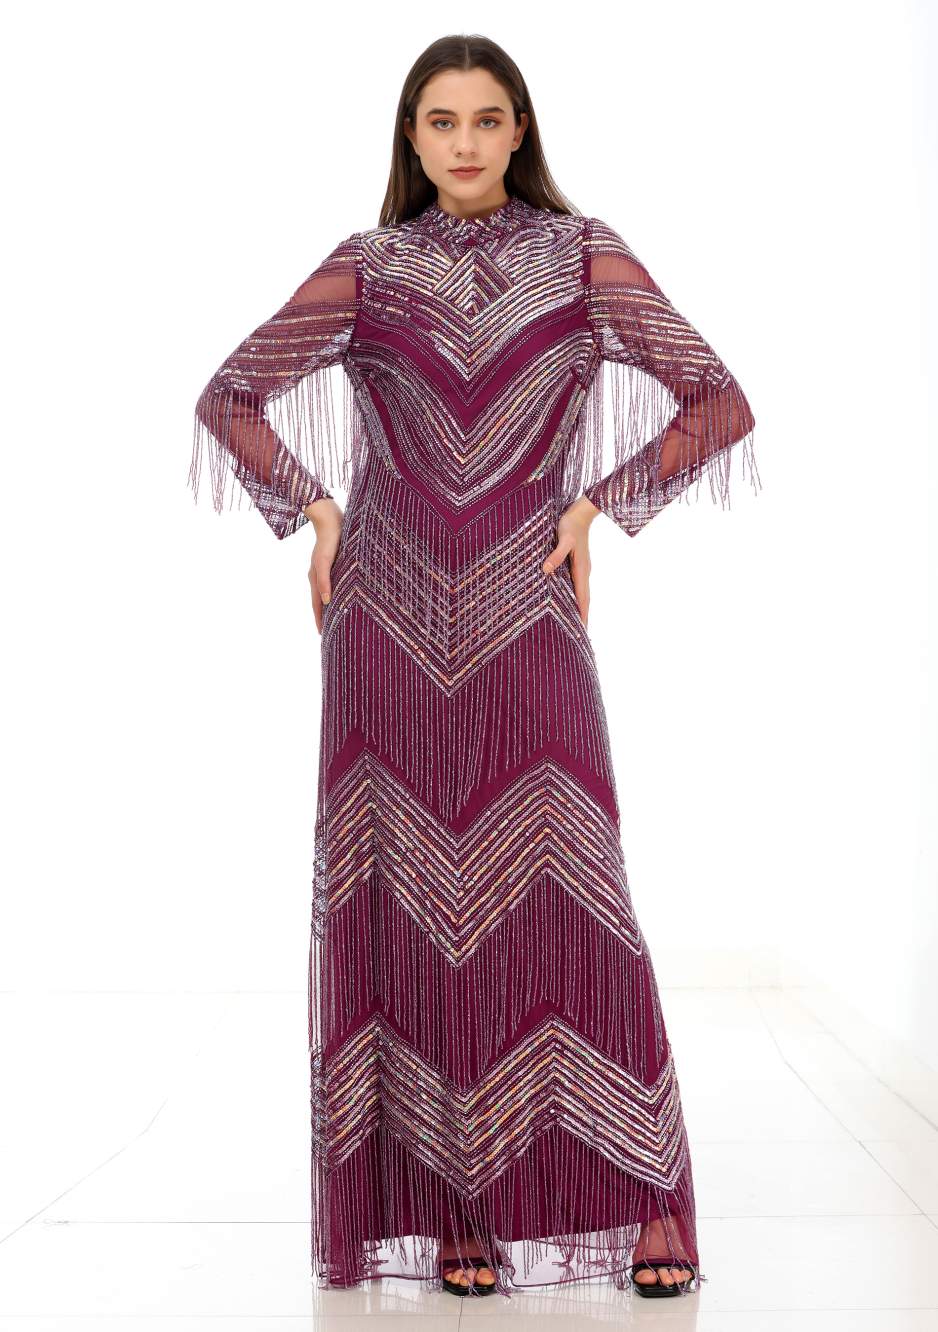 AYCE DRESS-Ayce dress burgundy